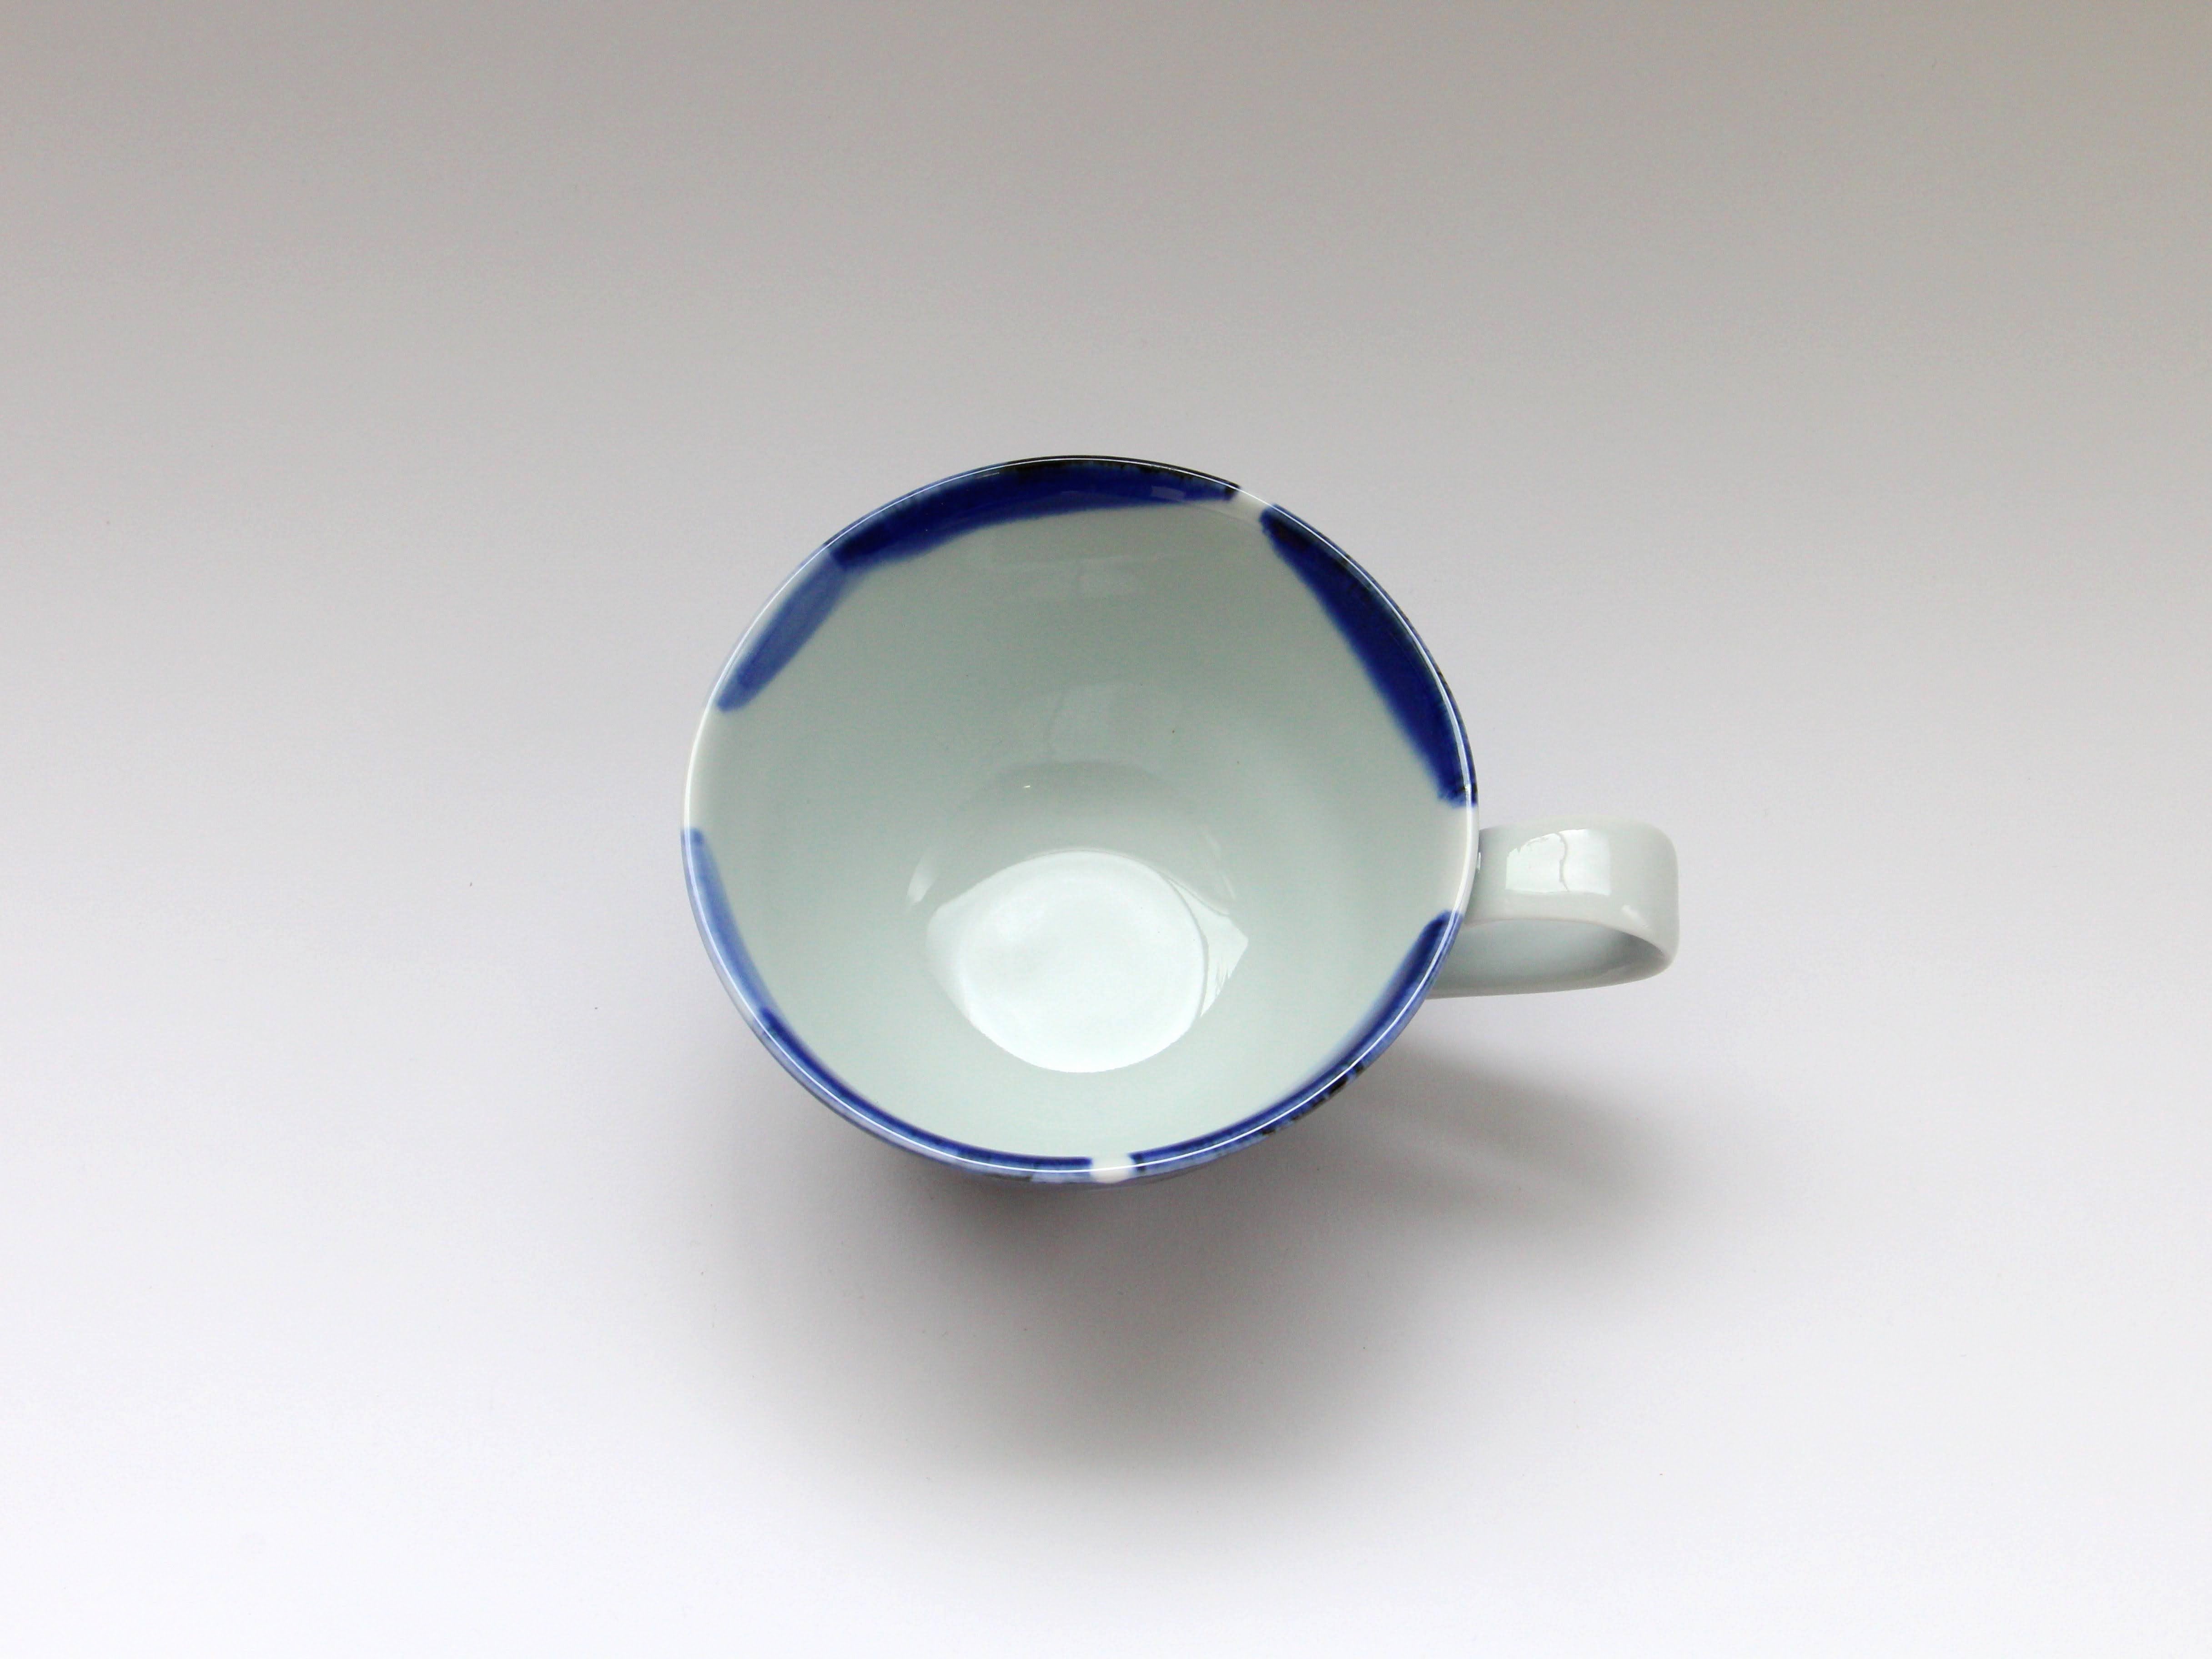 Aihana Soup Cup Blue [Binsai Kiln]